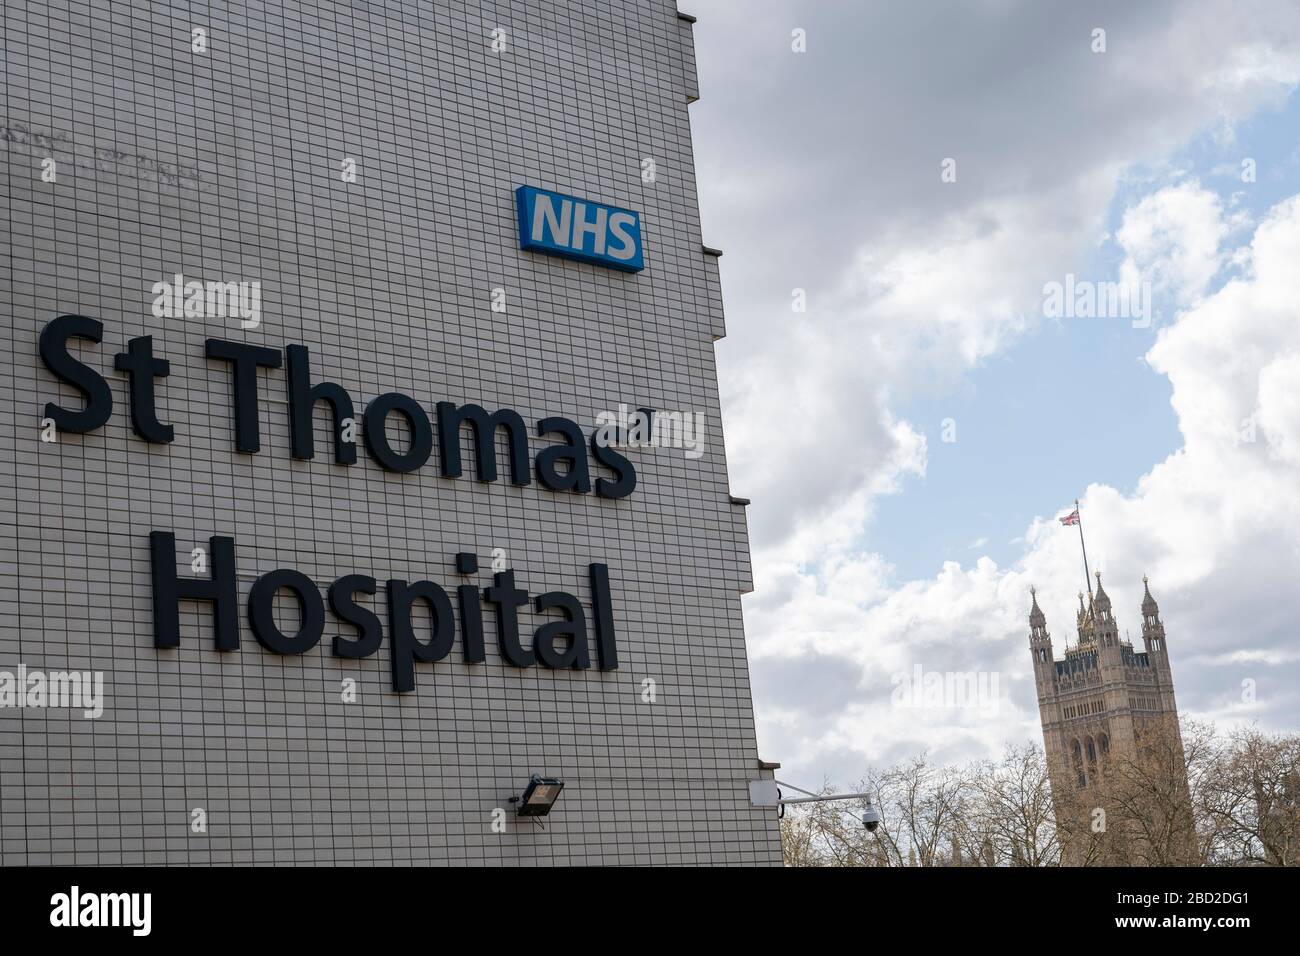 London, UK. 6th April, 2020. Outside St Thomas' Hospital in Westminster during the Coronavirus Pandemic. (photo by Sam Mellish / Alamy Live News) Stock Photo